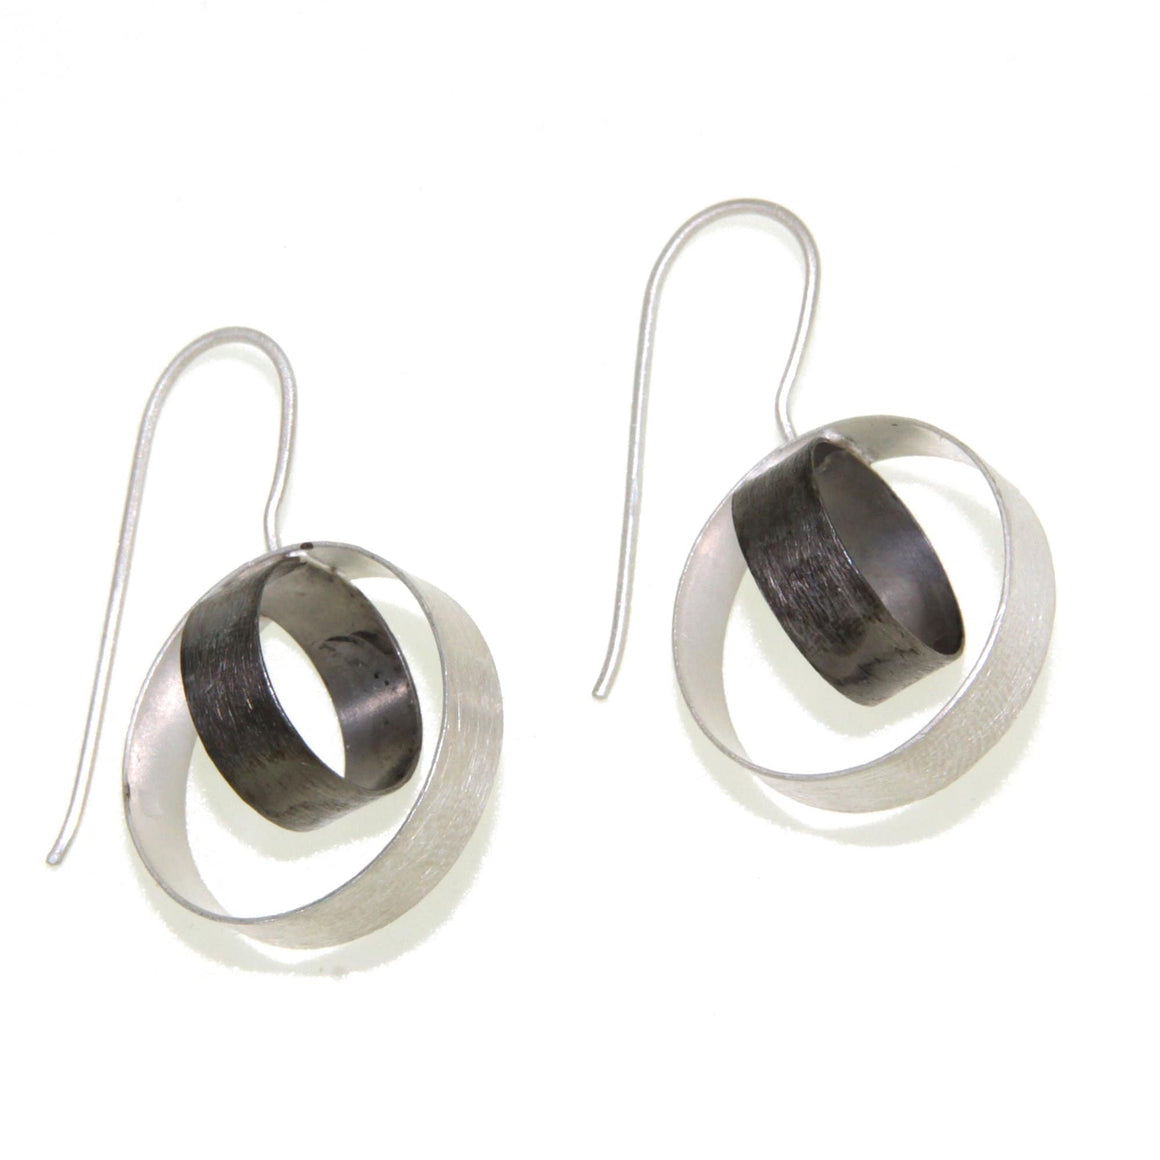 Manjusha Jewels earrings Shadow Circle Earrings in Silver and Dark Rhodium